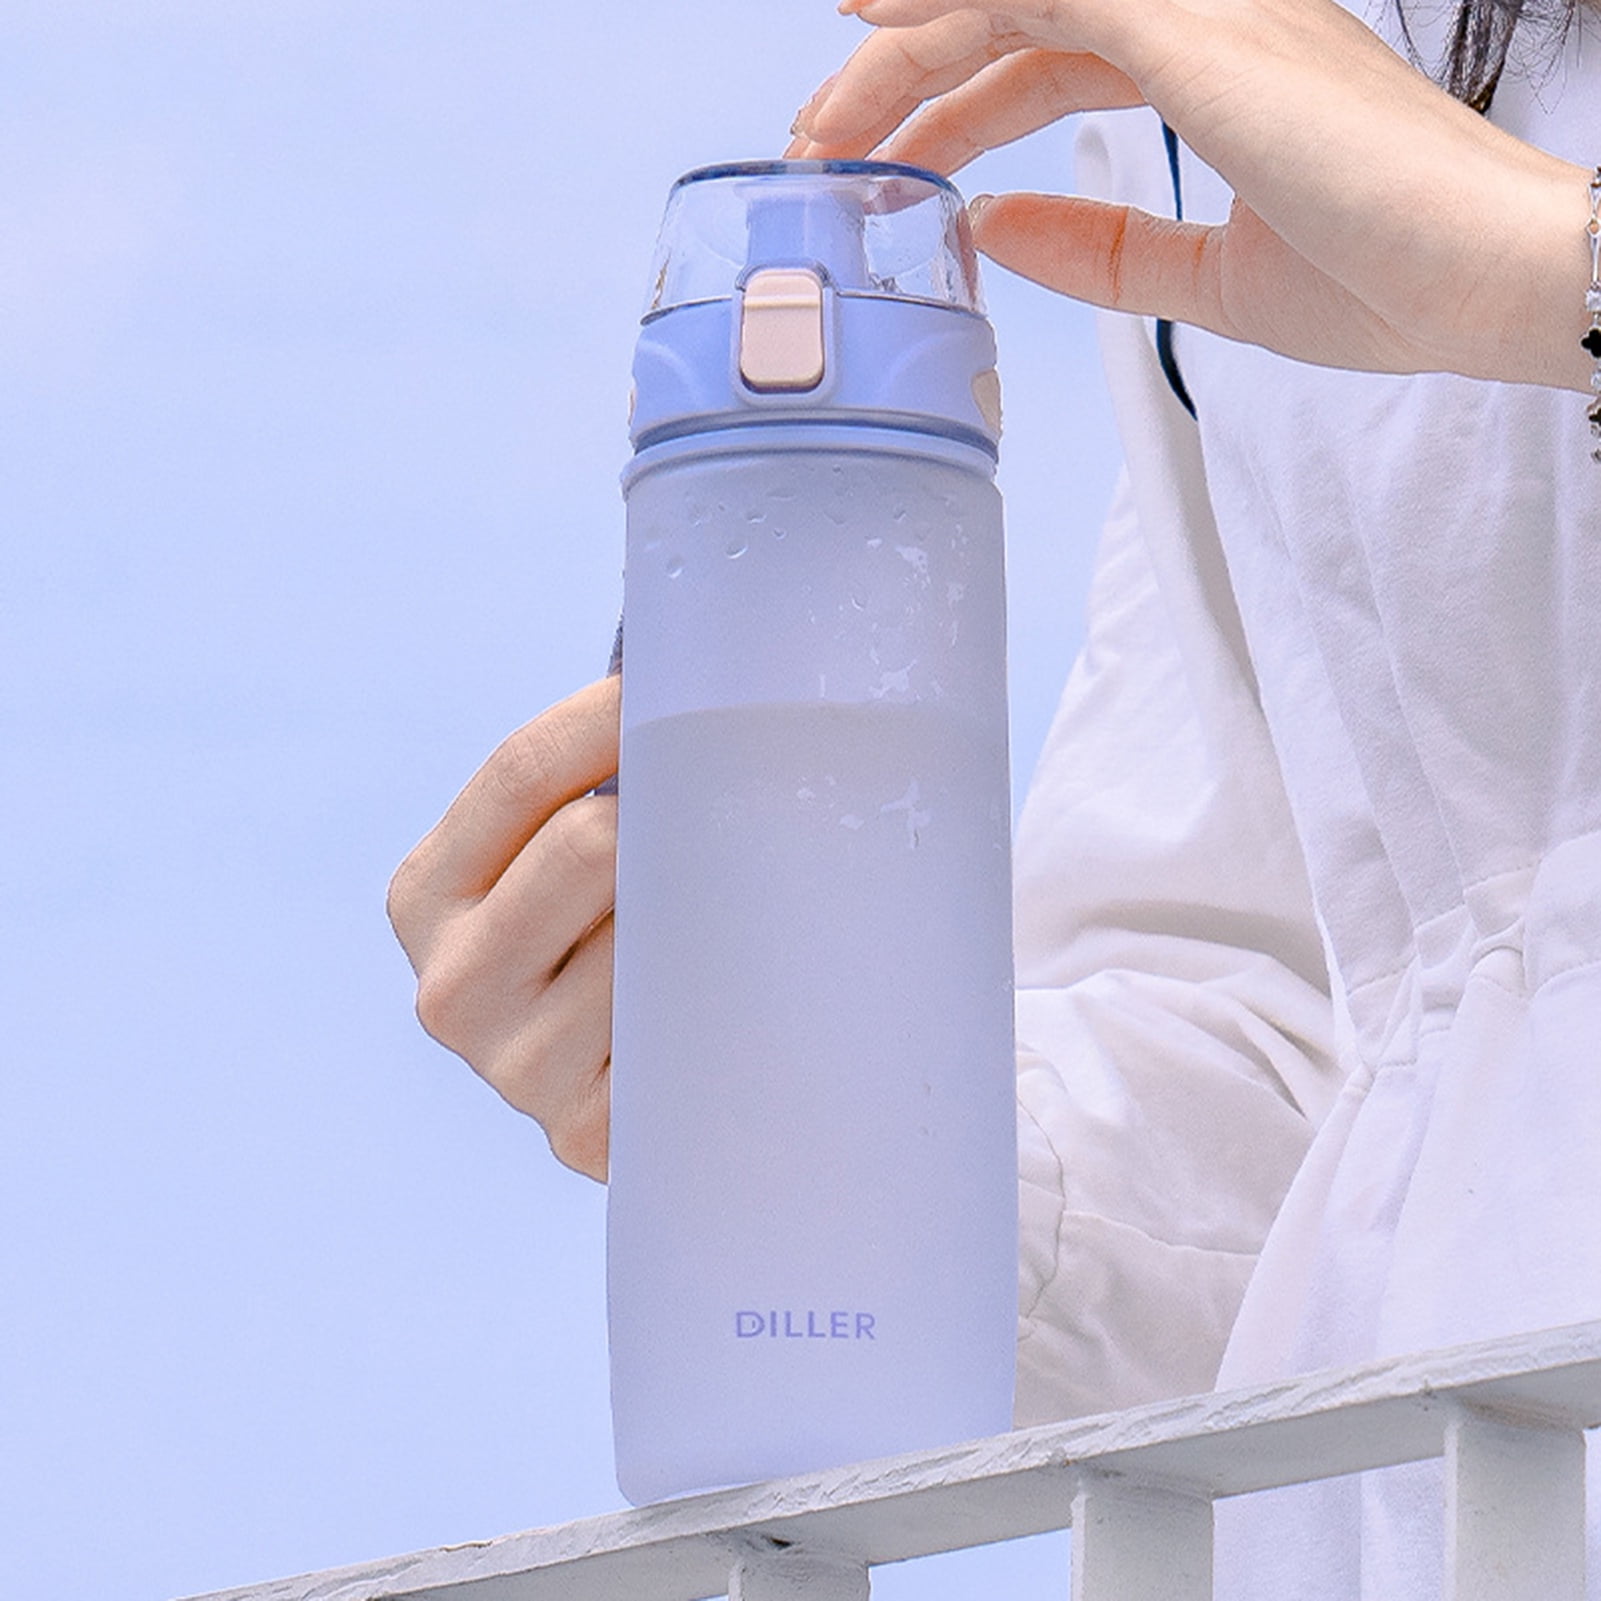 Hesroicy 1500/2300/3780ml Large Capacity Ergonomic Handgrip Water Bottle  Food Grade Leak-proof Lid Big Water Bottle for Outdoor 